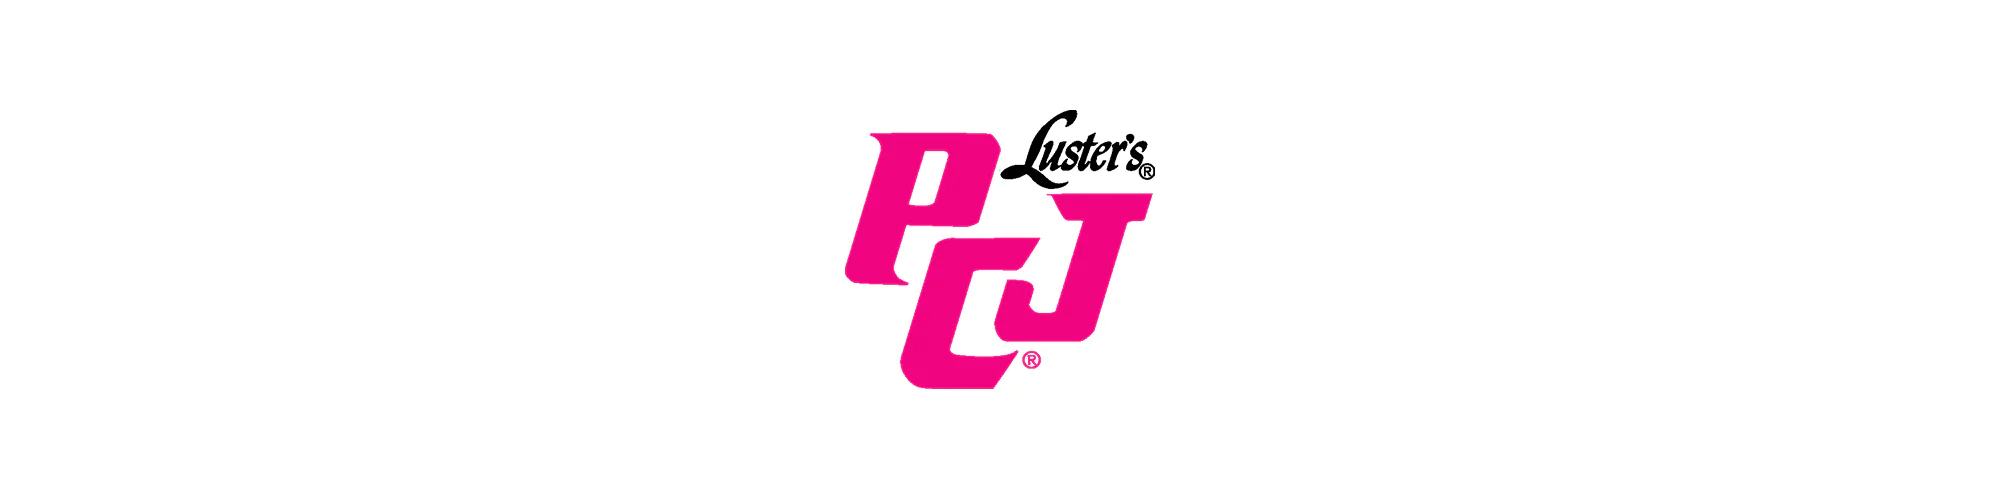 Luster's PCJ Logo